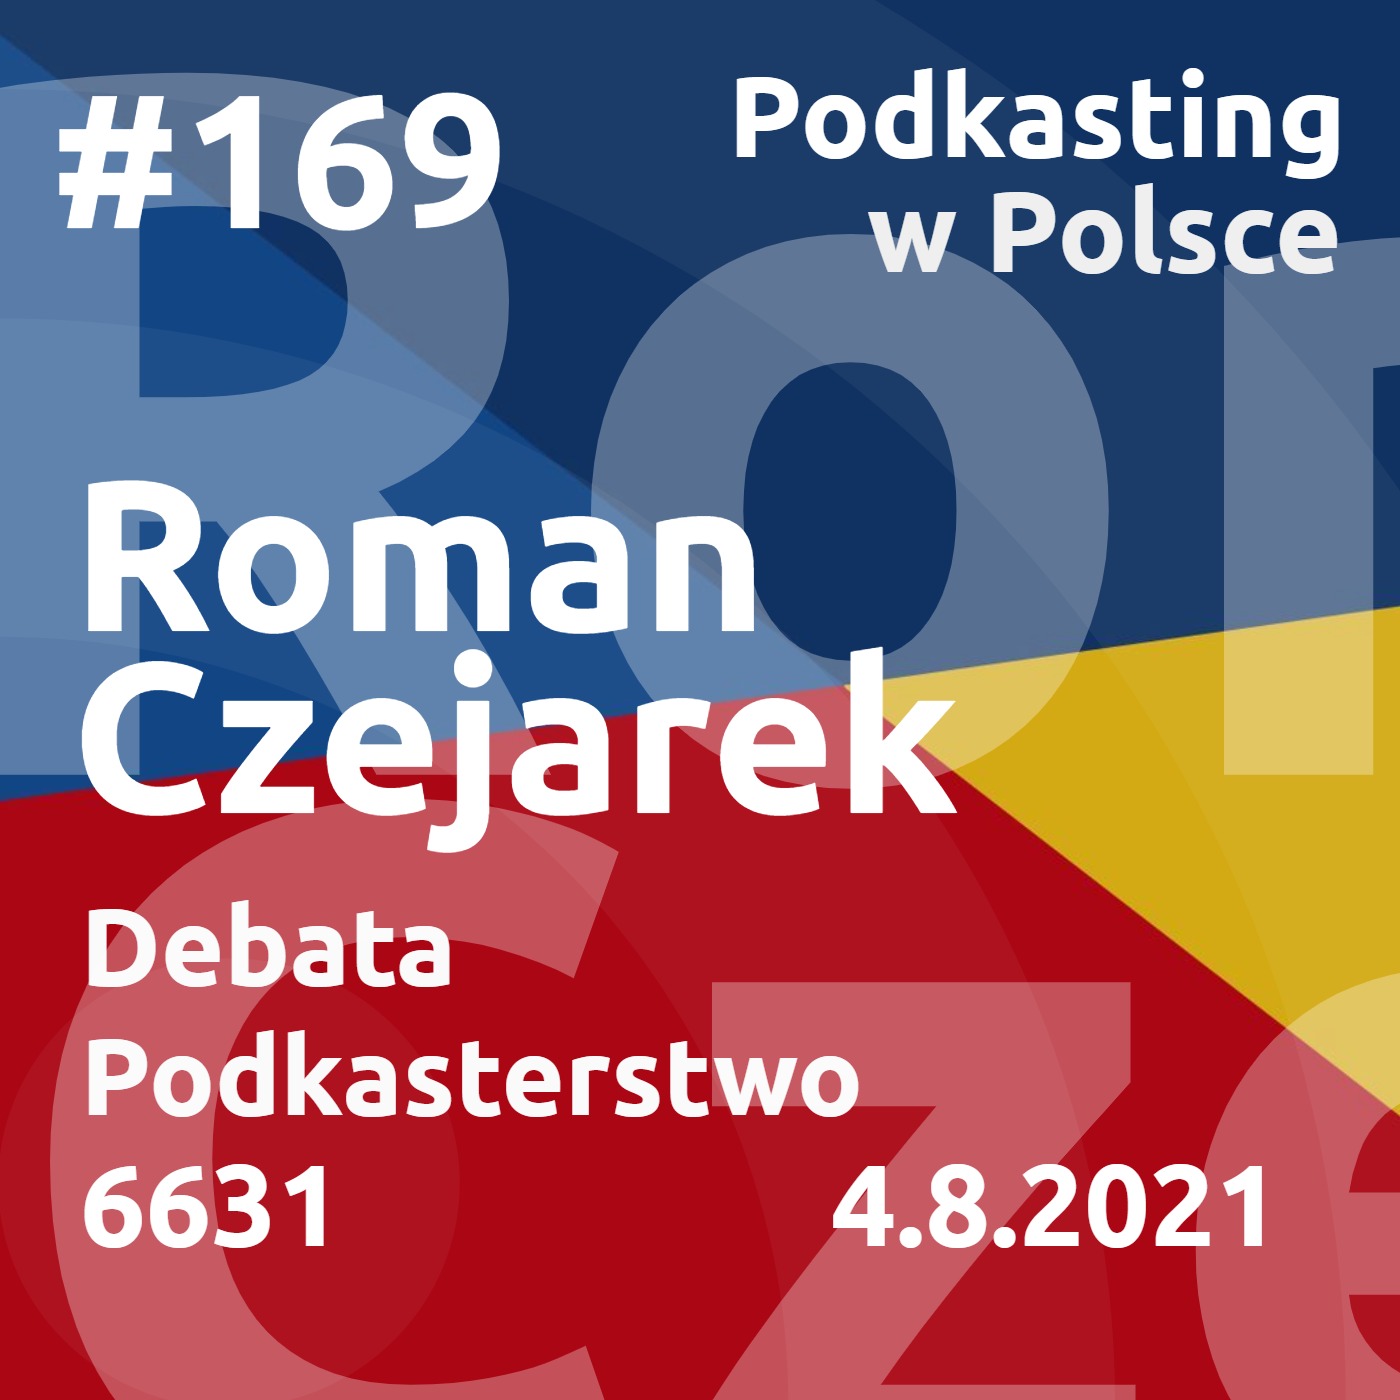 #169 - Roman Czejarek - Podkasterstwo. Debata